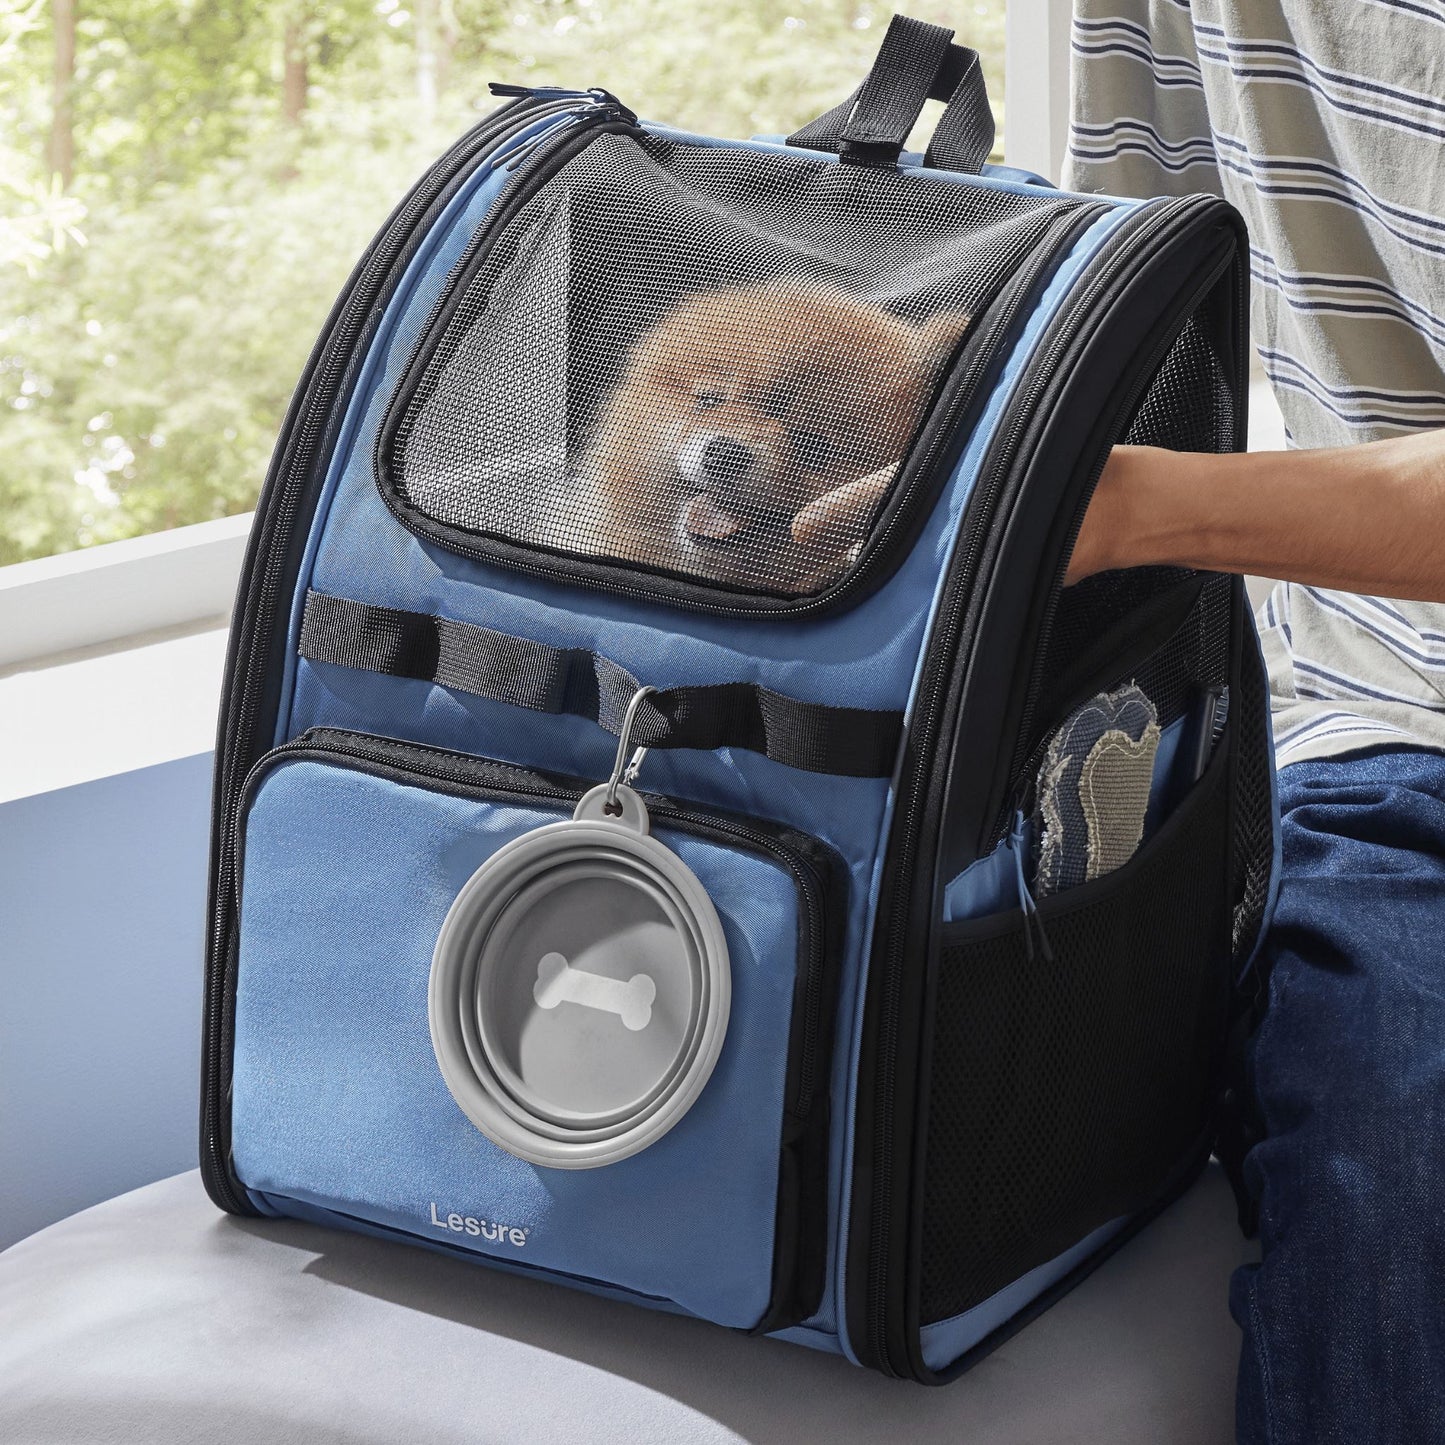 Ergonomic Backpack Carrier Lesure Pet